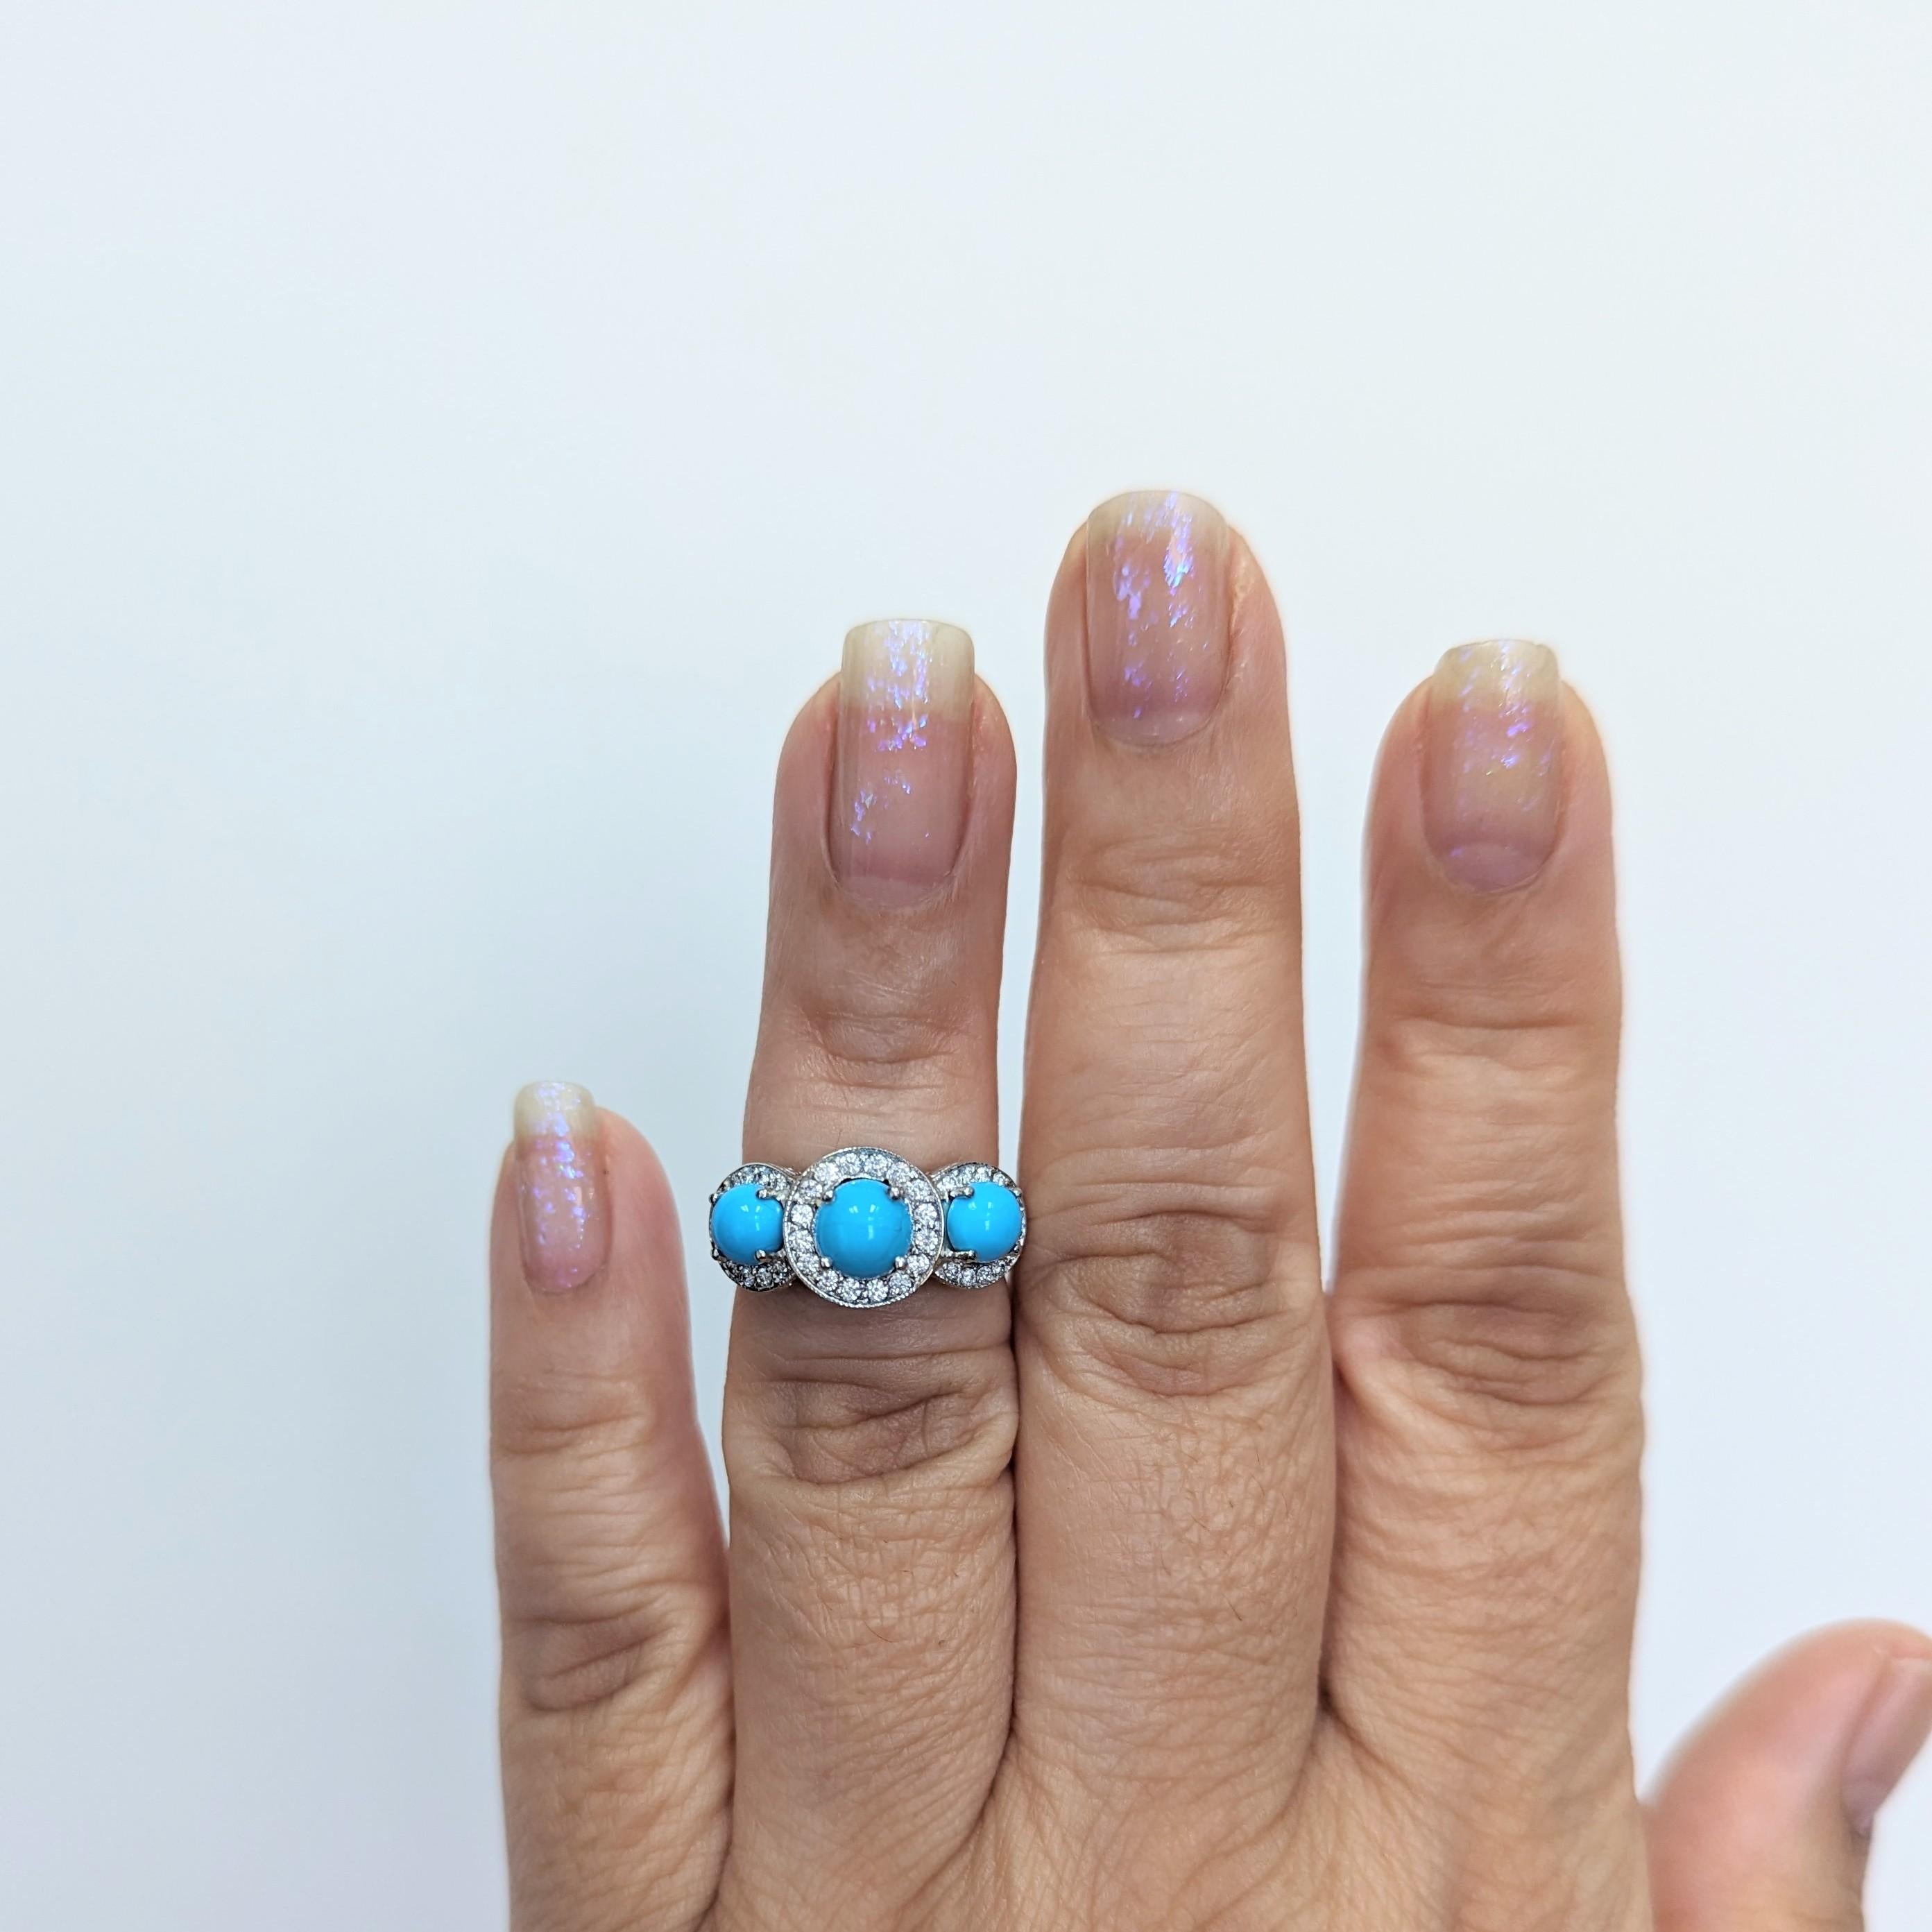 Beautiful turquoise round cabochon and white diamond three stone ring.  Handmade in platinum.  Ring size 5.75.